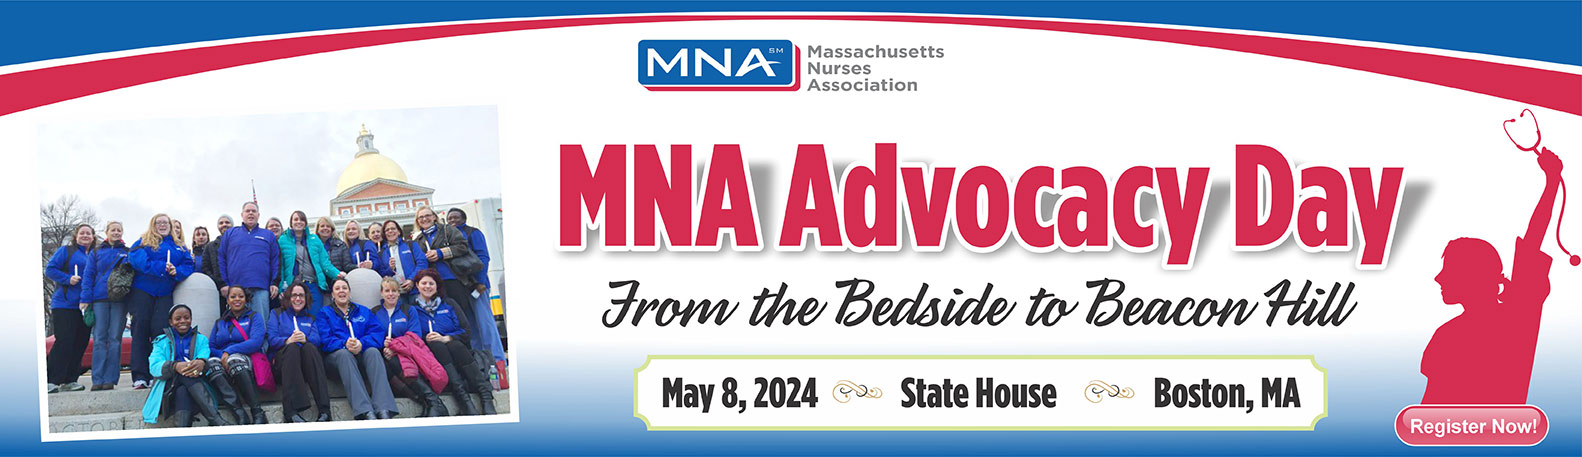 MNA Advocacy Day, May 8, 2024, State House, Boston MA